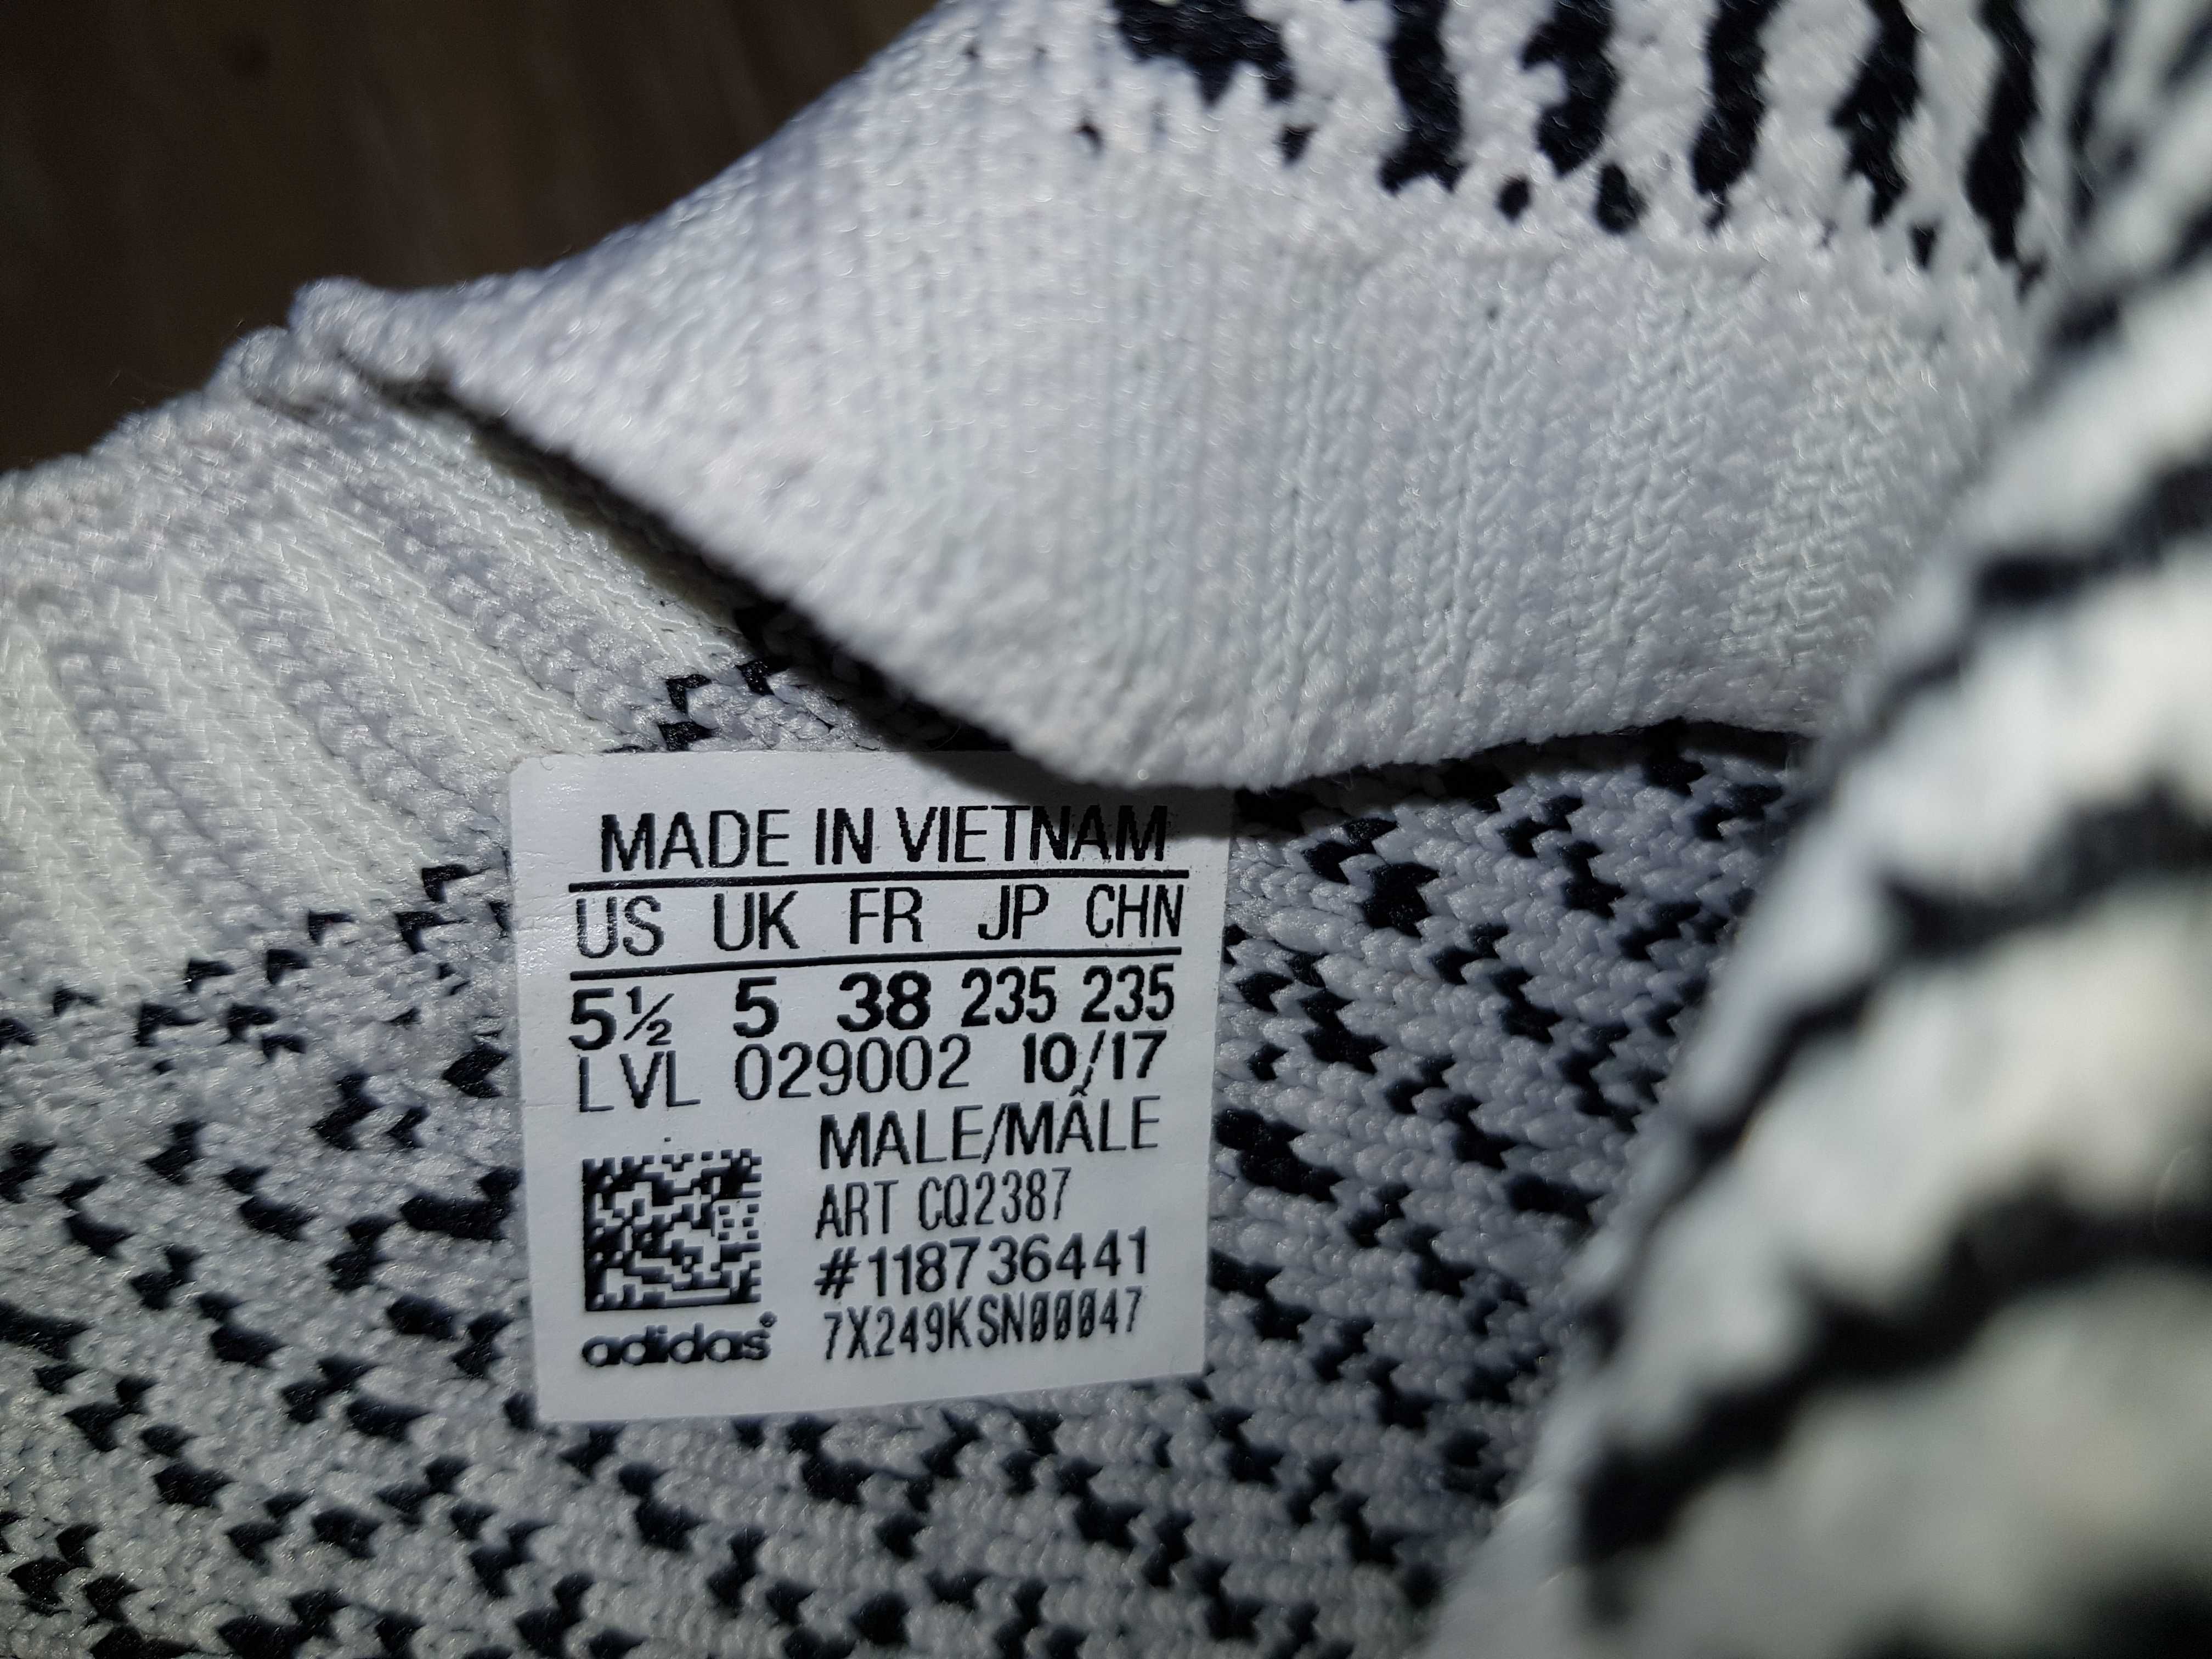 Adidasi Aldidas NMD R1 Primeknit Boost marimea 38 Nike Jordan